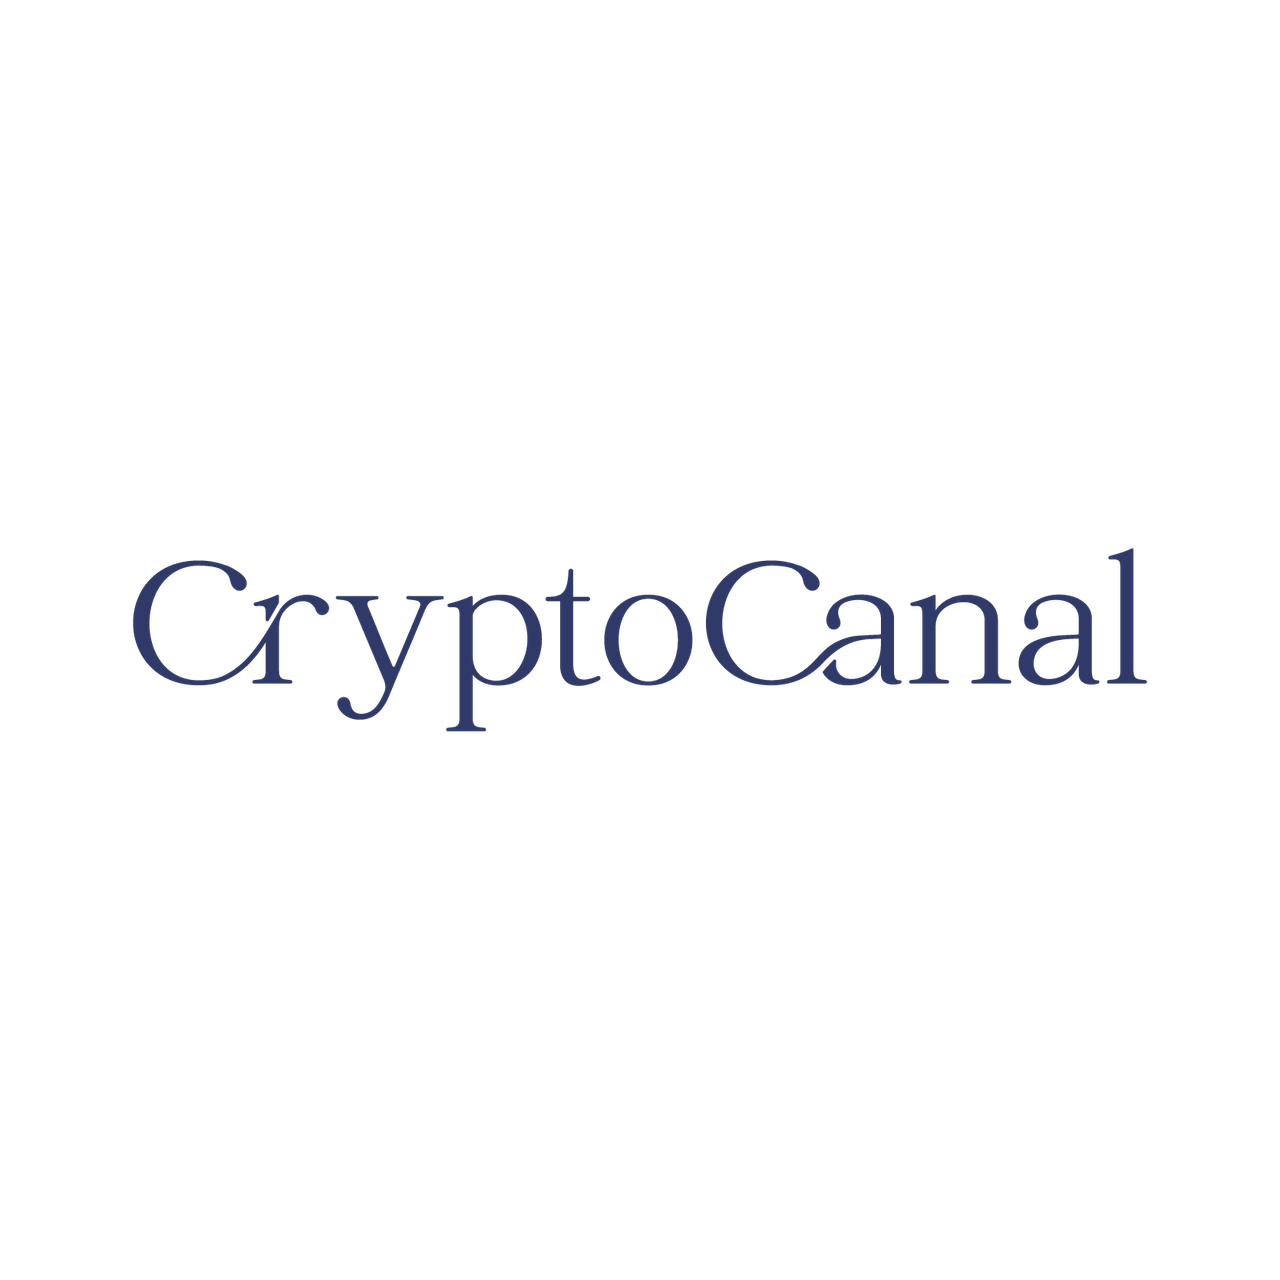 CryptoCanal